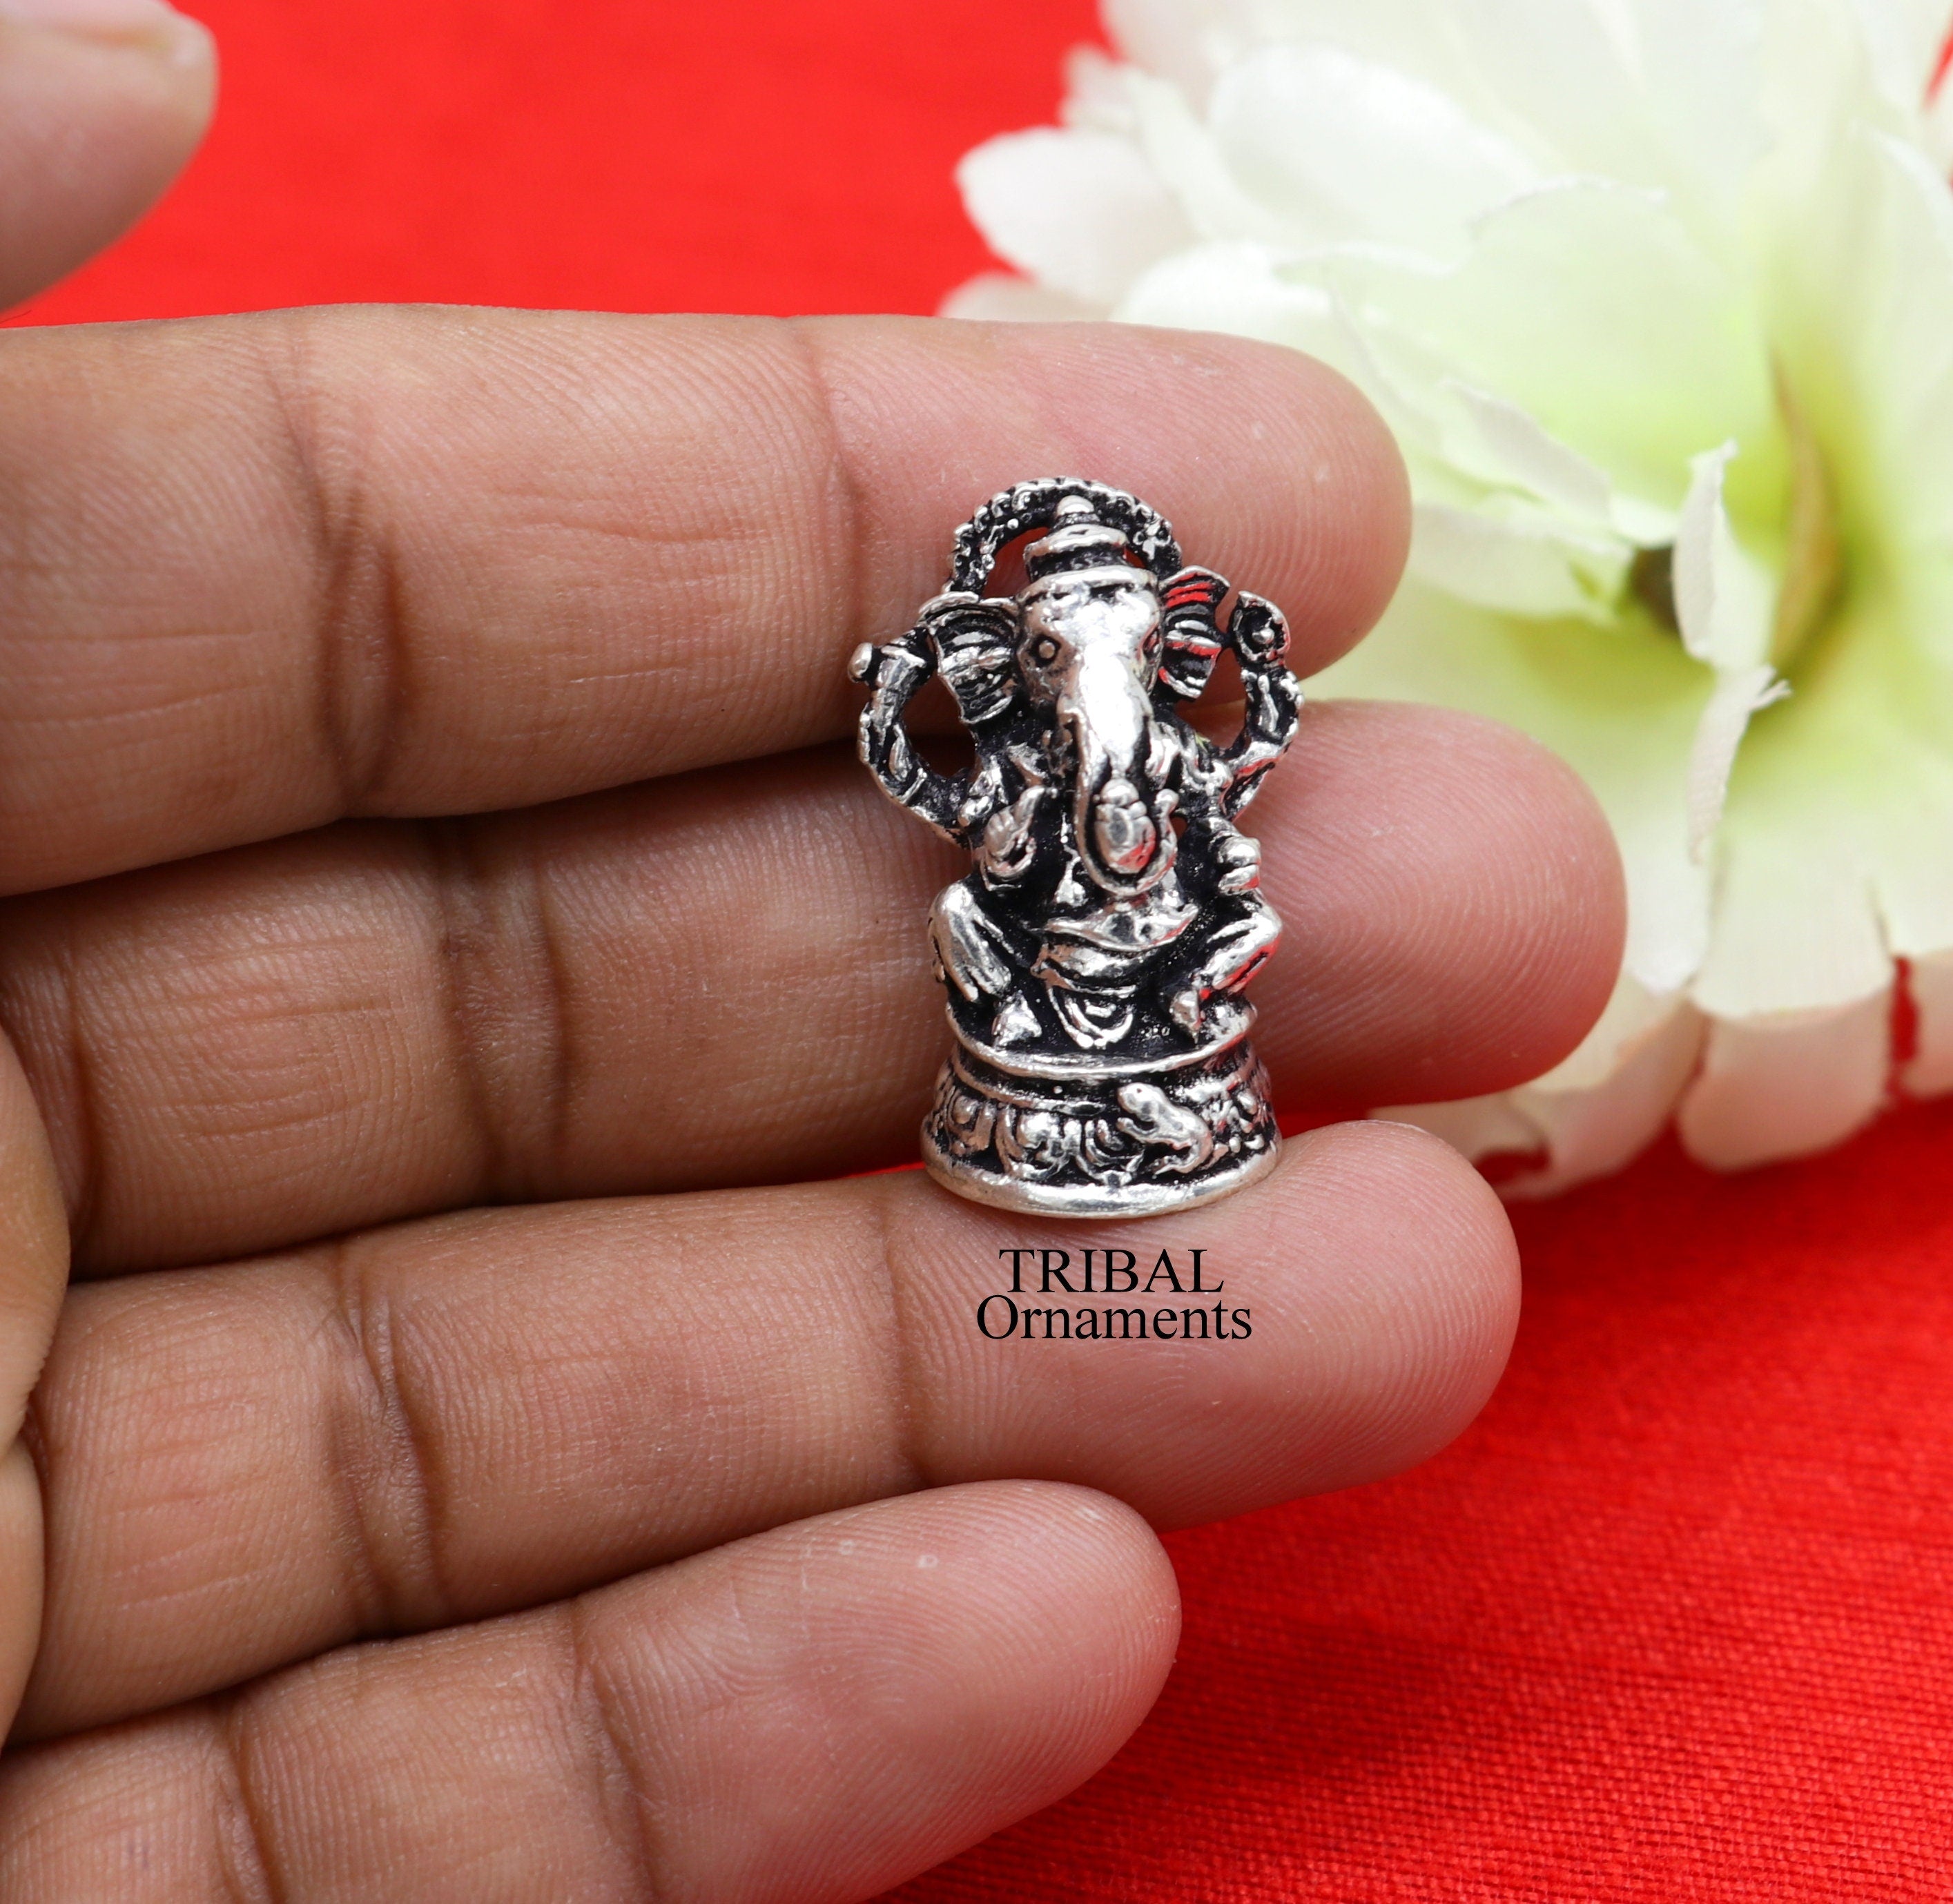 Lord Ganesha Ring-925 Sterling Silver Elephant Ganapati Ring-ganesha  Blessing Lord of Success Wealth Wisdom Om Talisman Amulet Good Luck - Etsy  | Sterling silver elephant, Silver elephants, 925 sterling silver